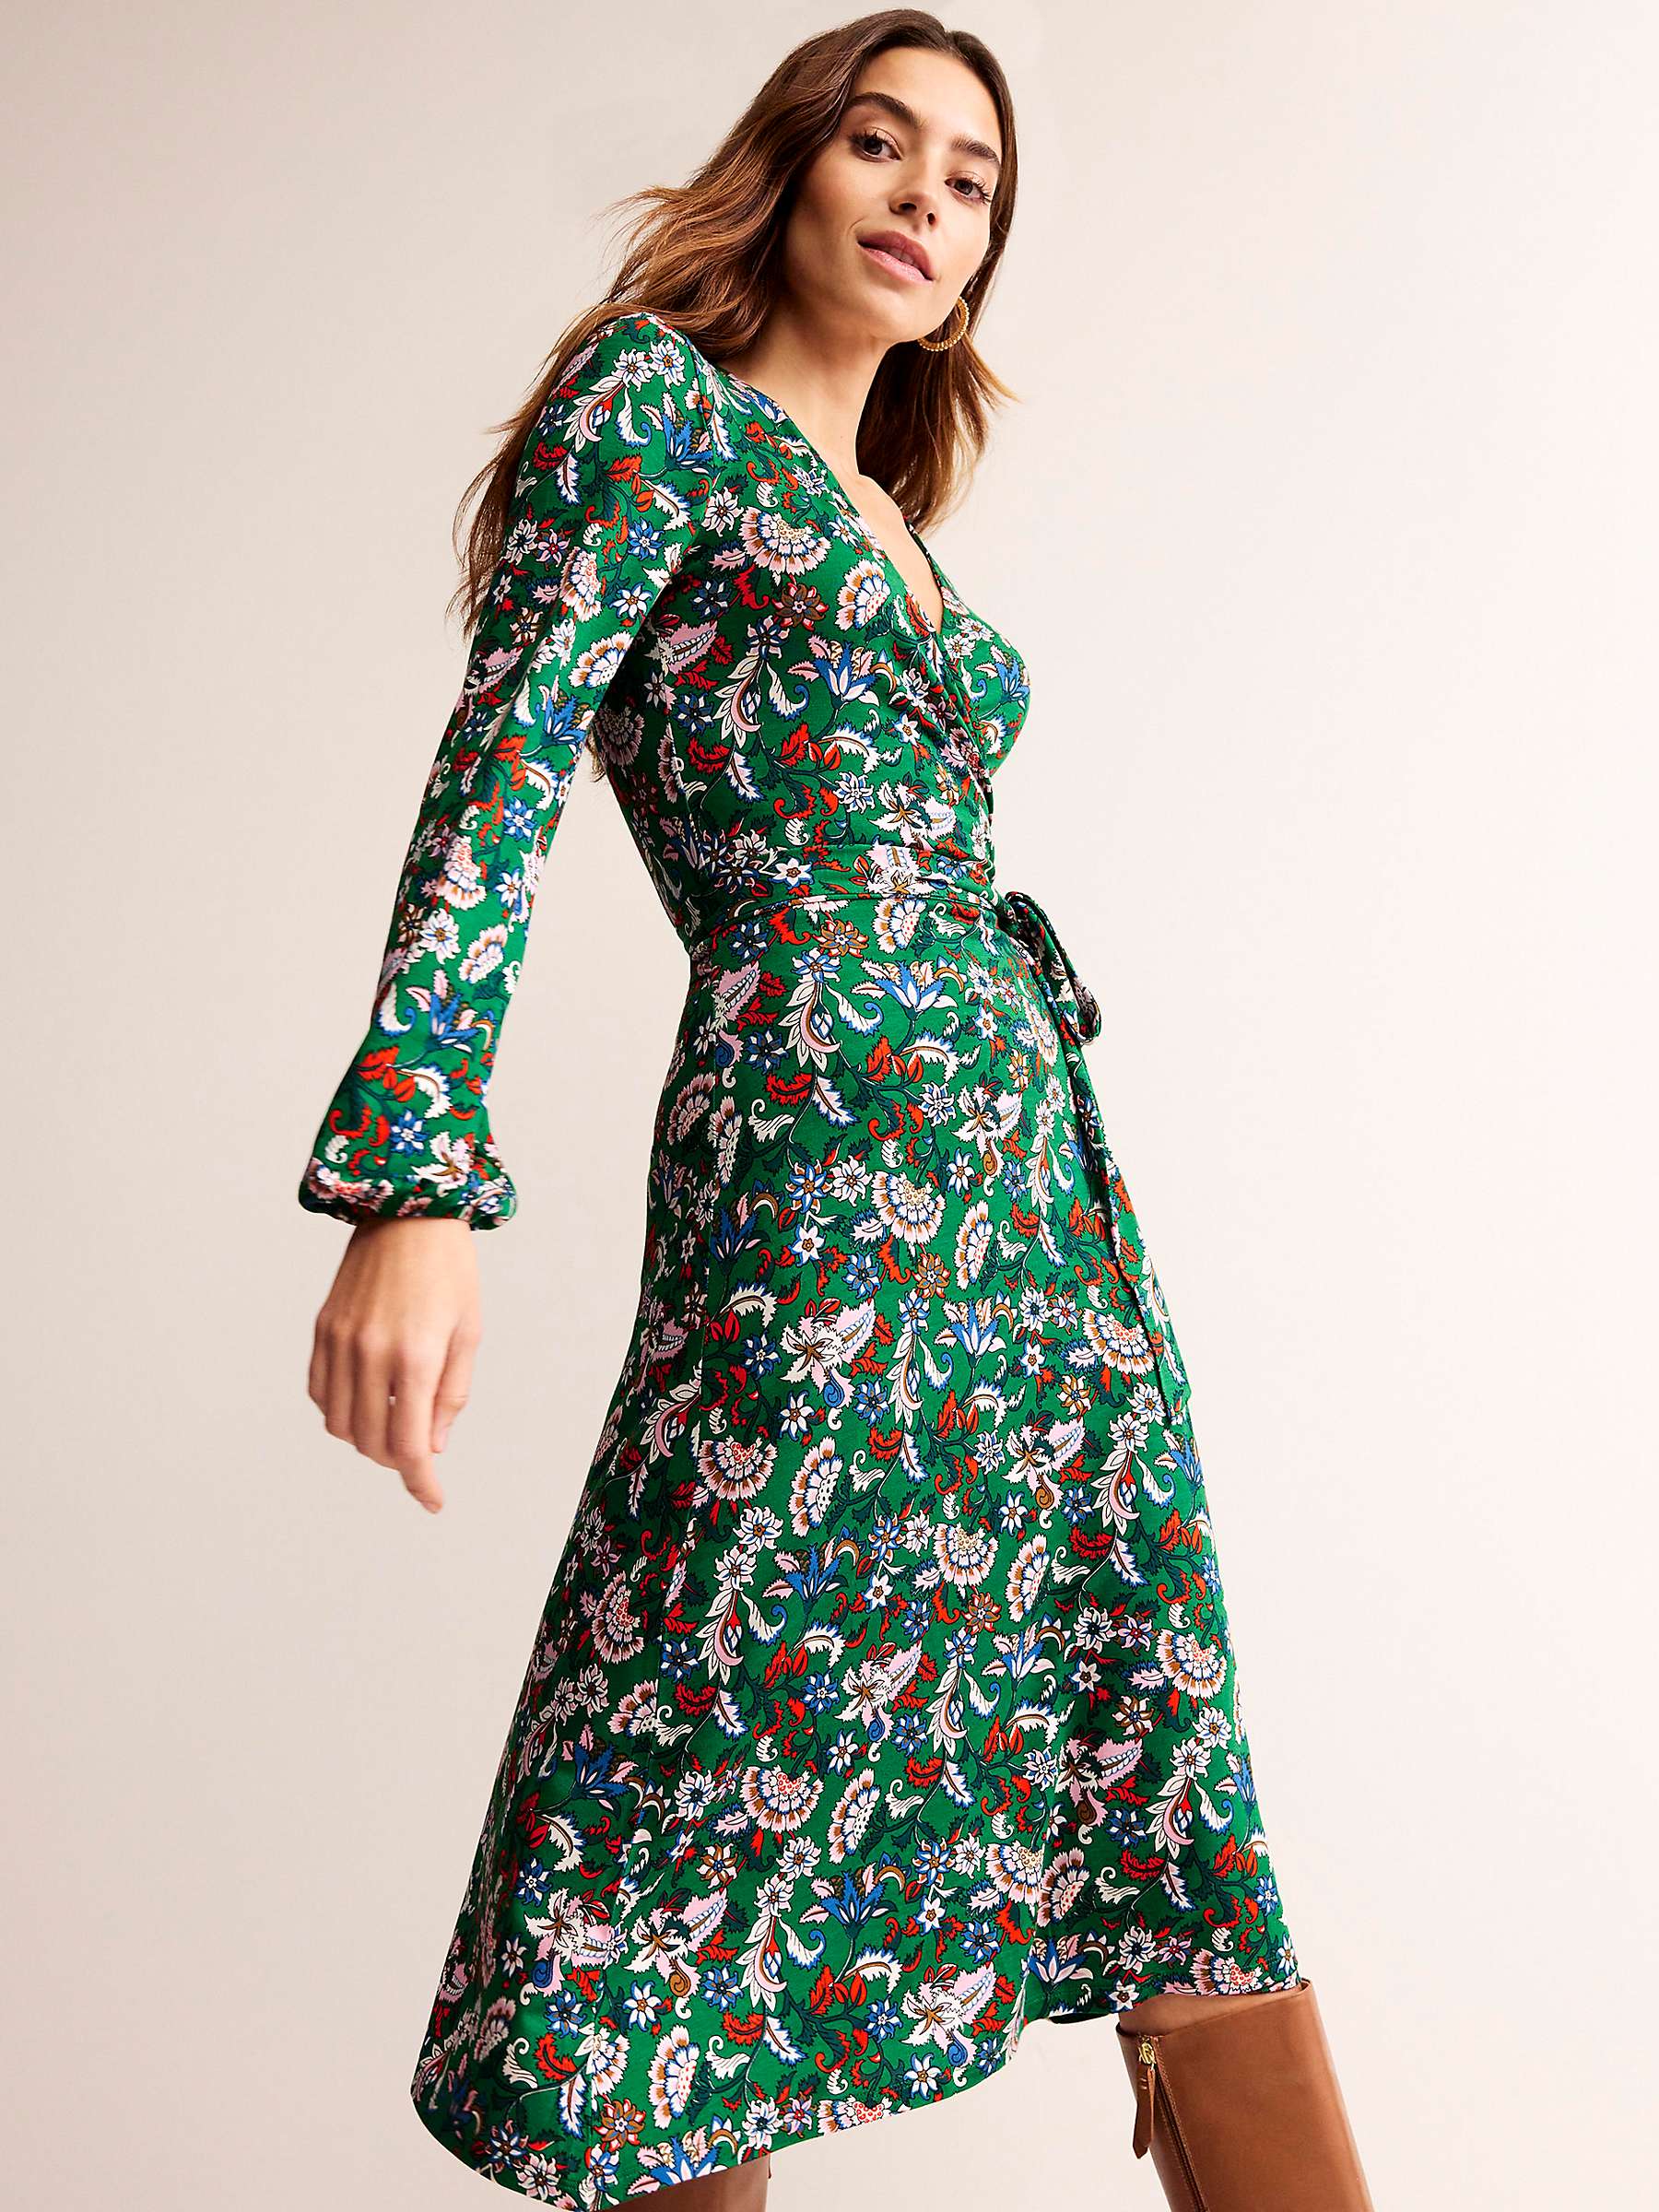 Buy Boden Joanna Ecovero Floral Knee Length Dress, Green/Multi Online at johnlewis.com